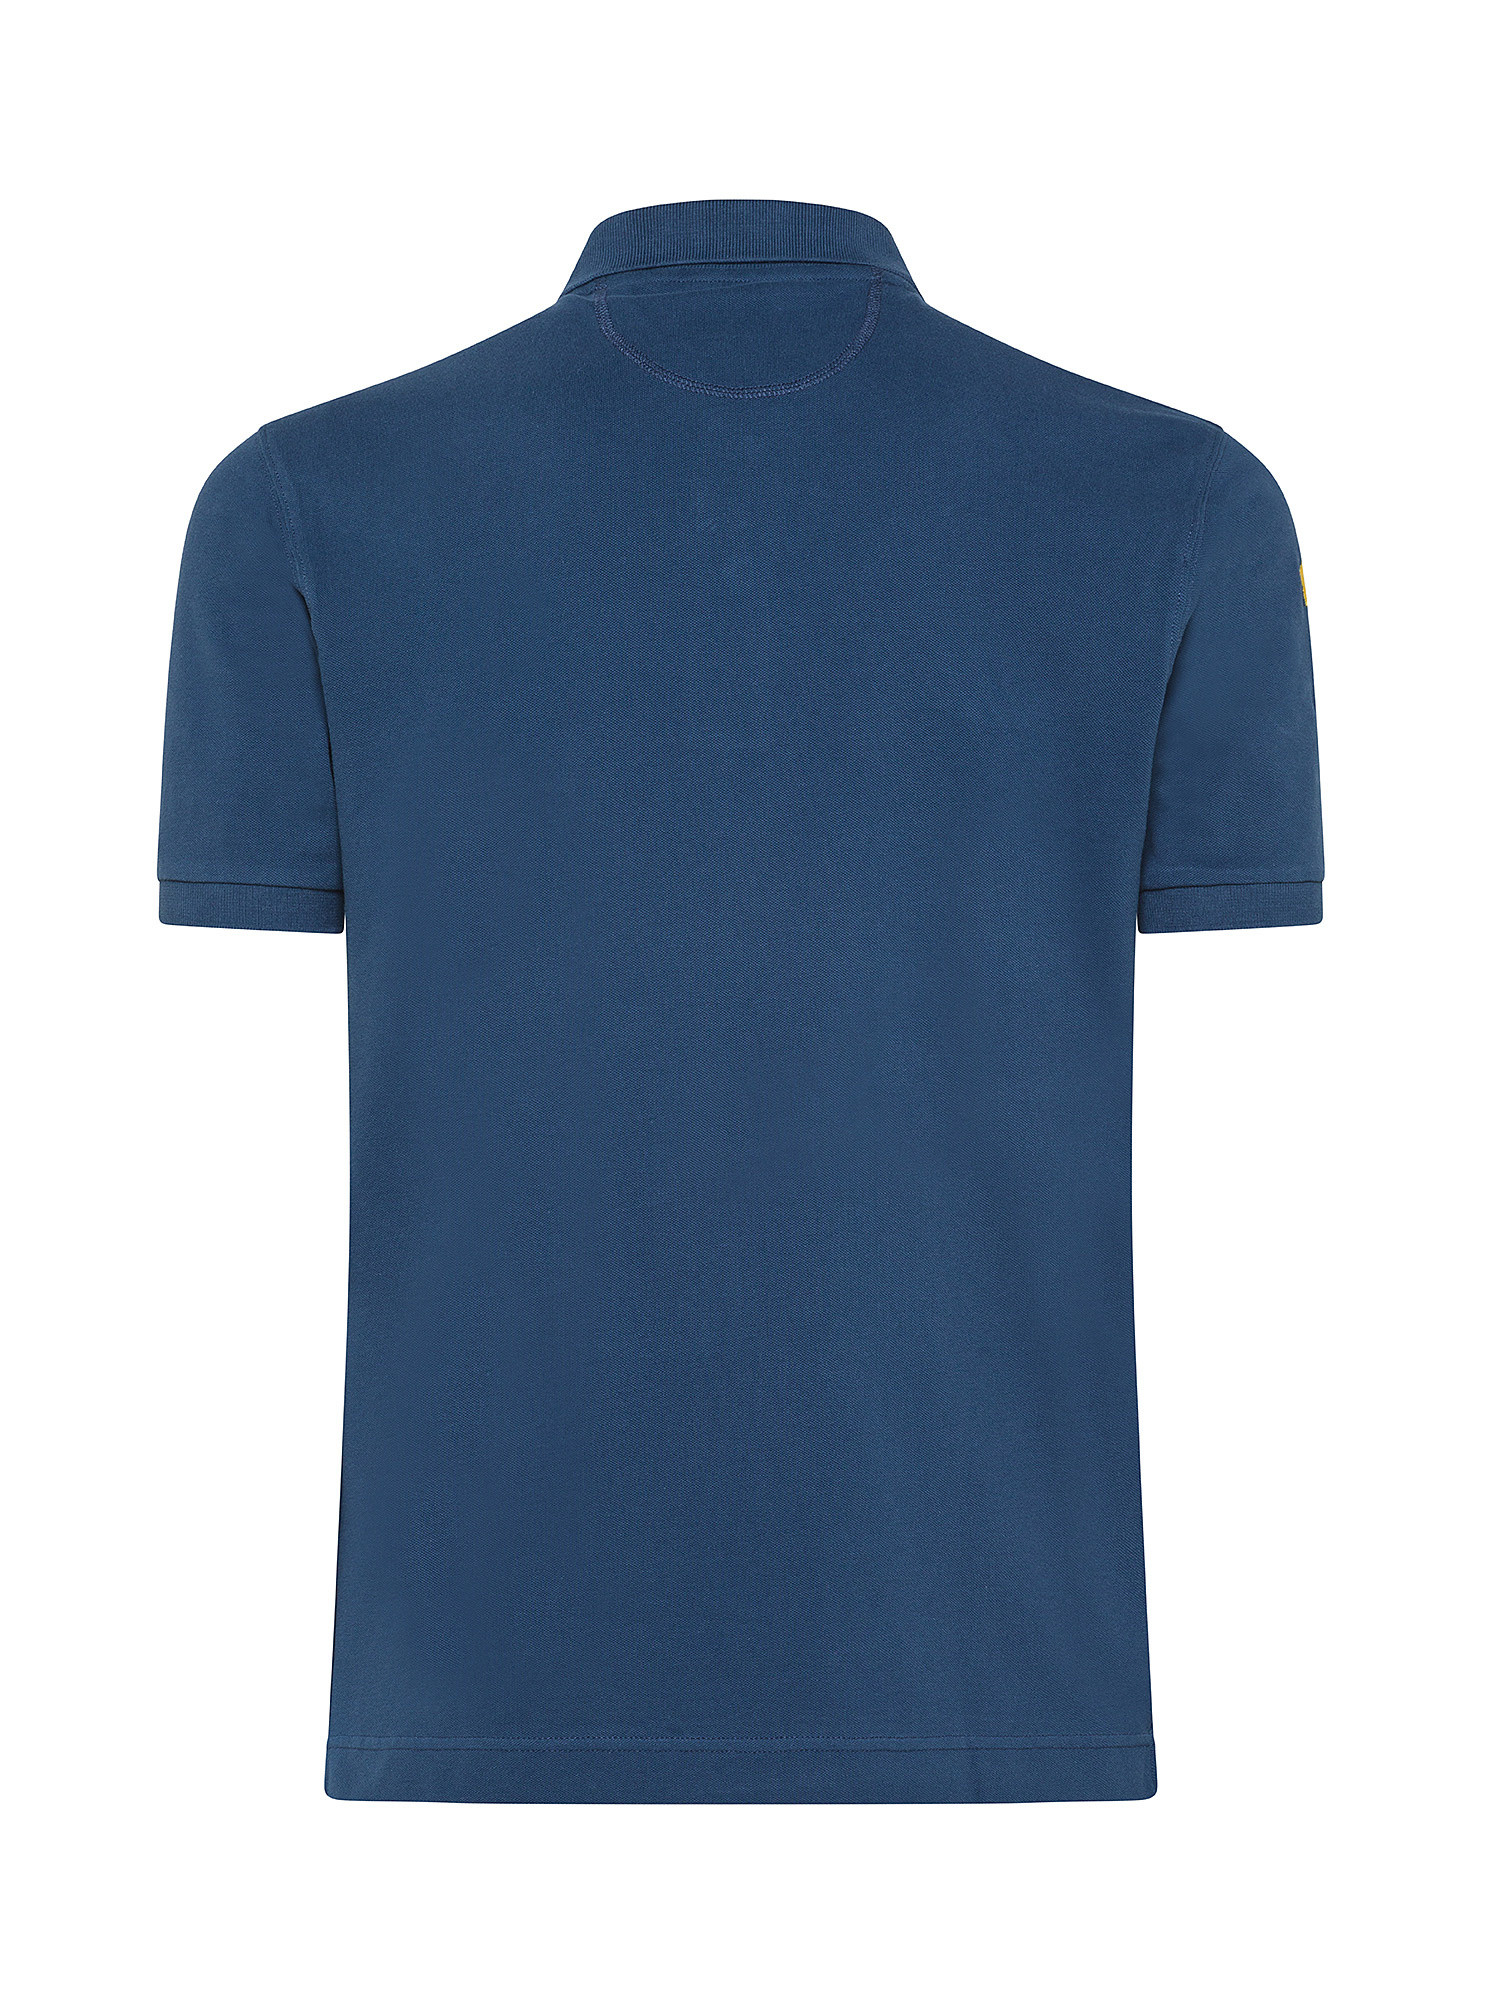 La Martina - Short-sleeved polo shirt in stretch piqué, Blue, large image number 1